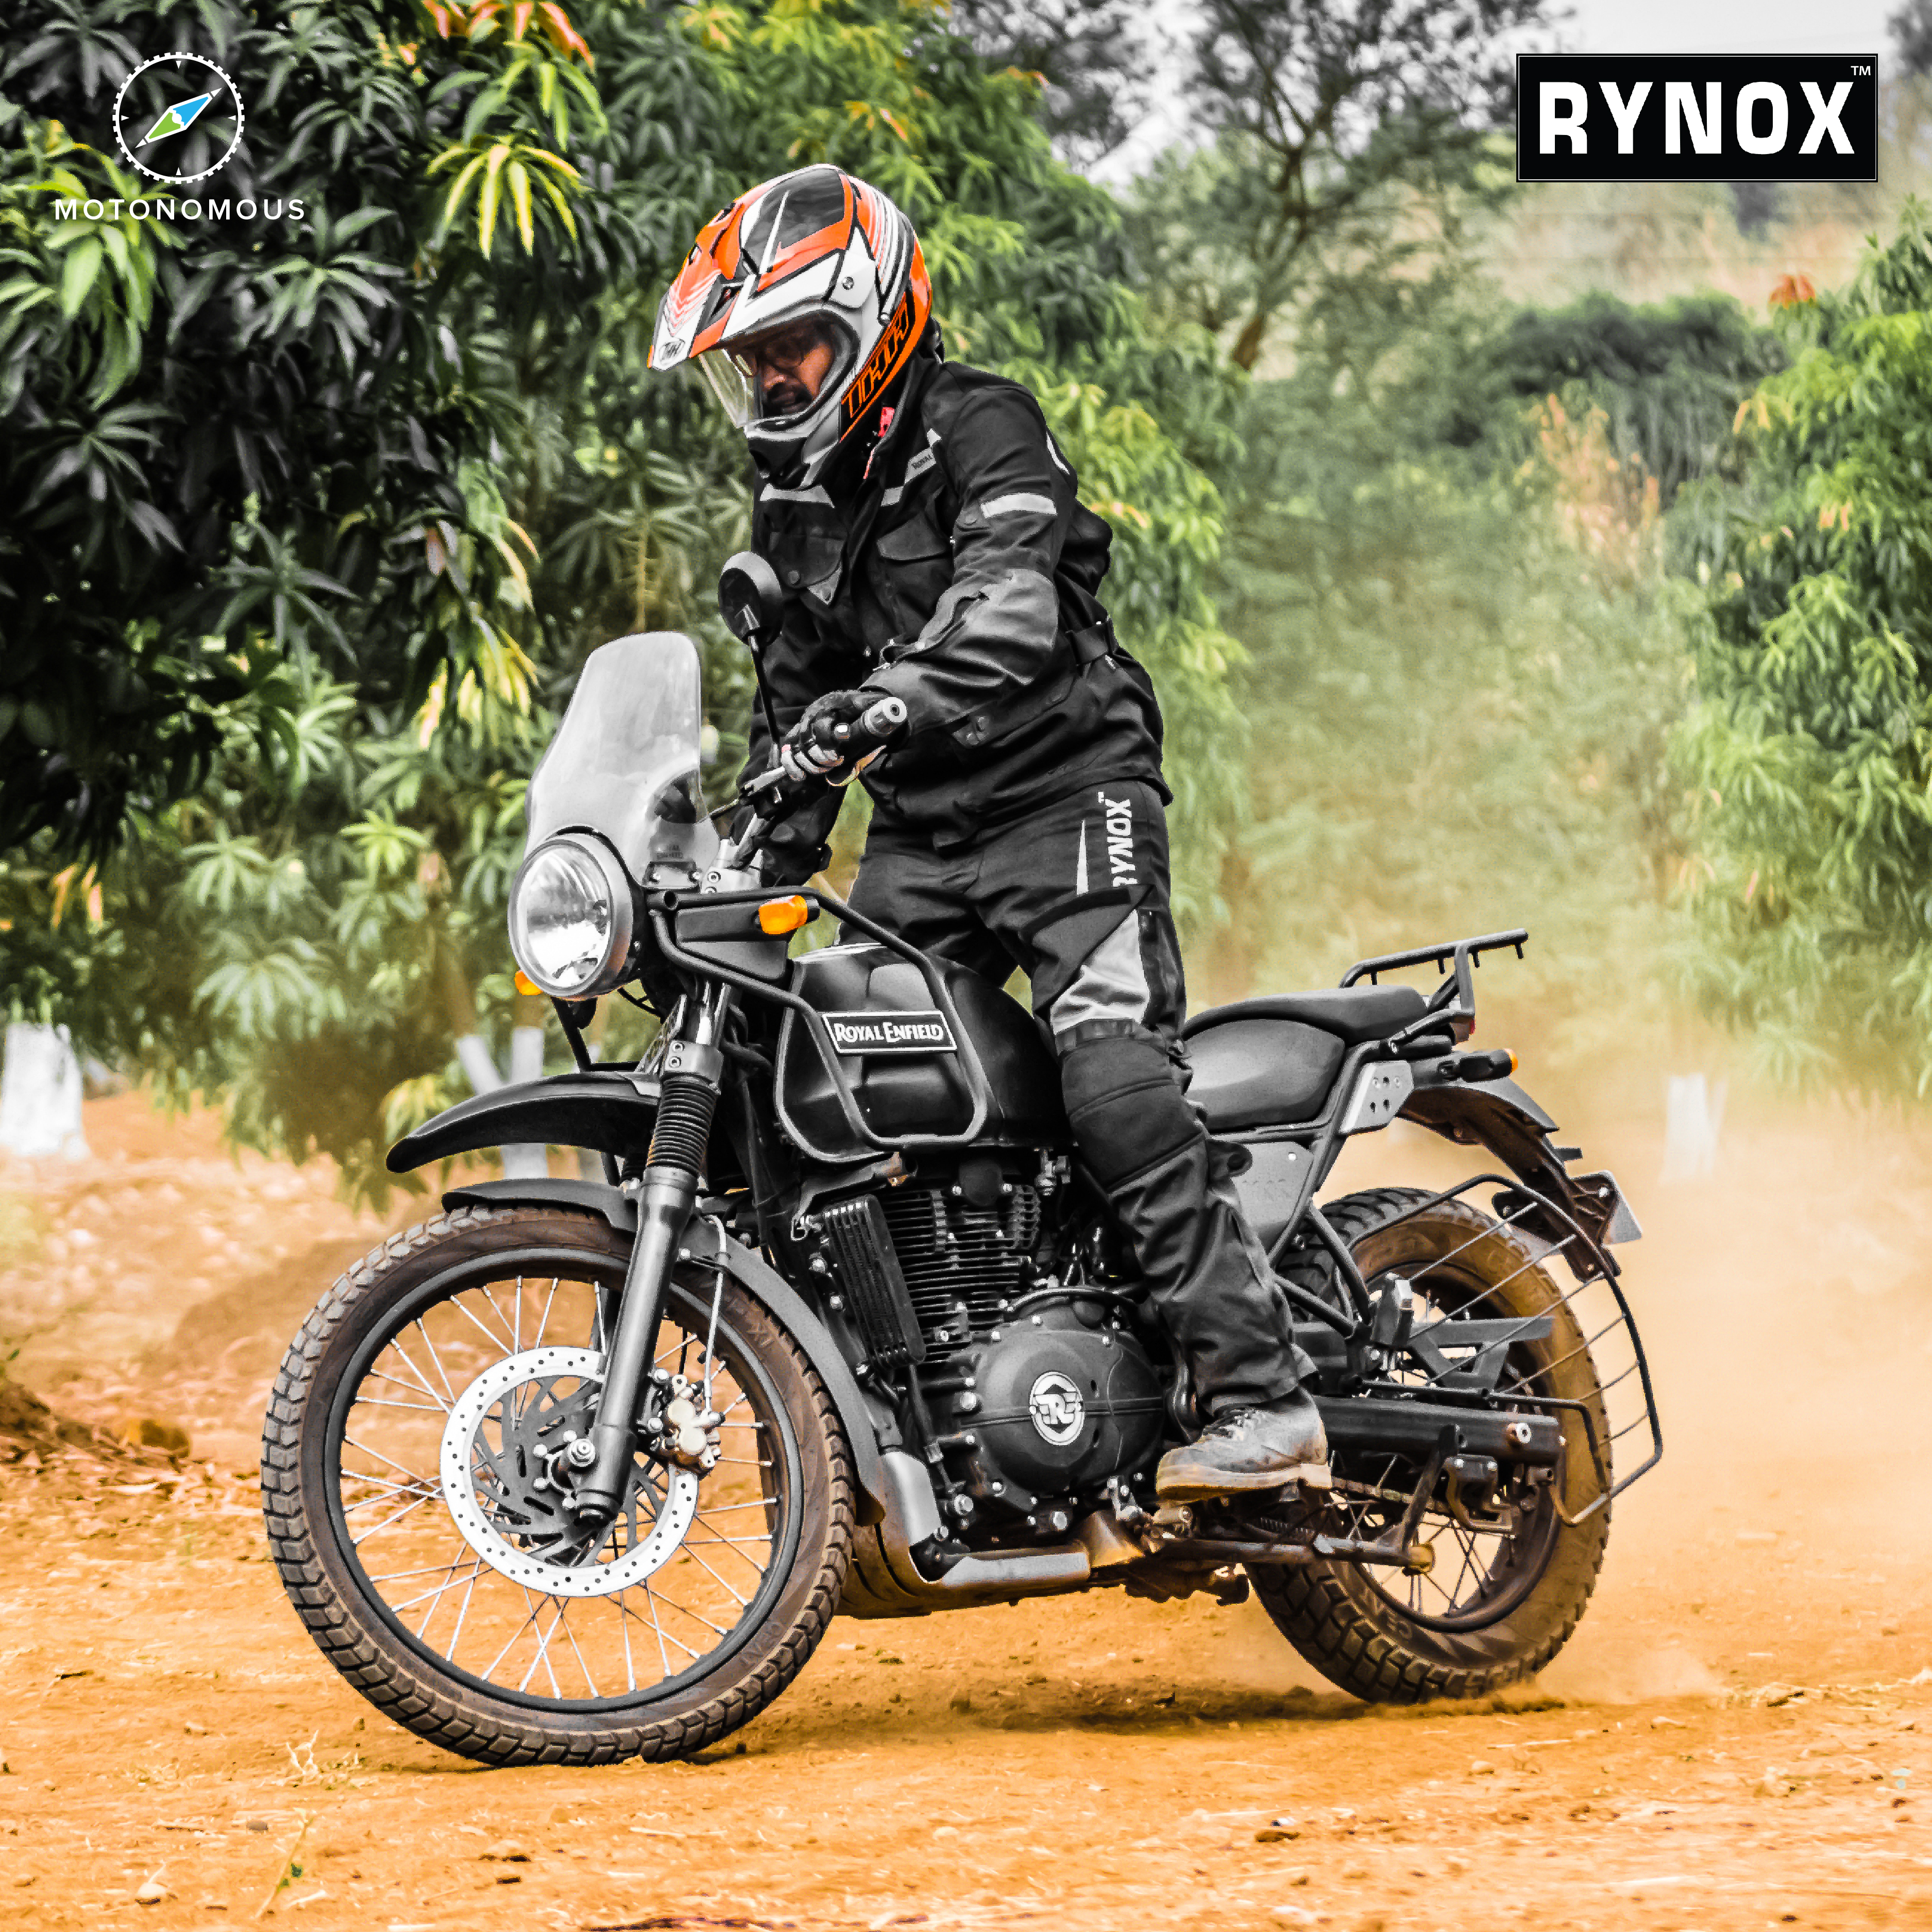 RYNOX ADVENTO RIDING PANTS | Riding pants, Riding gear, Riding